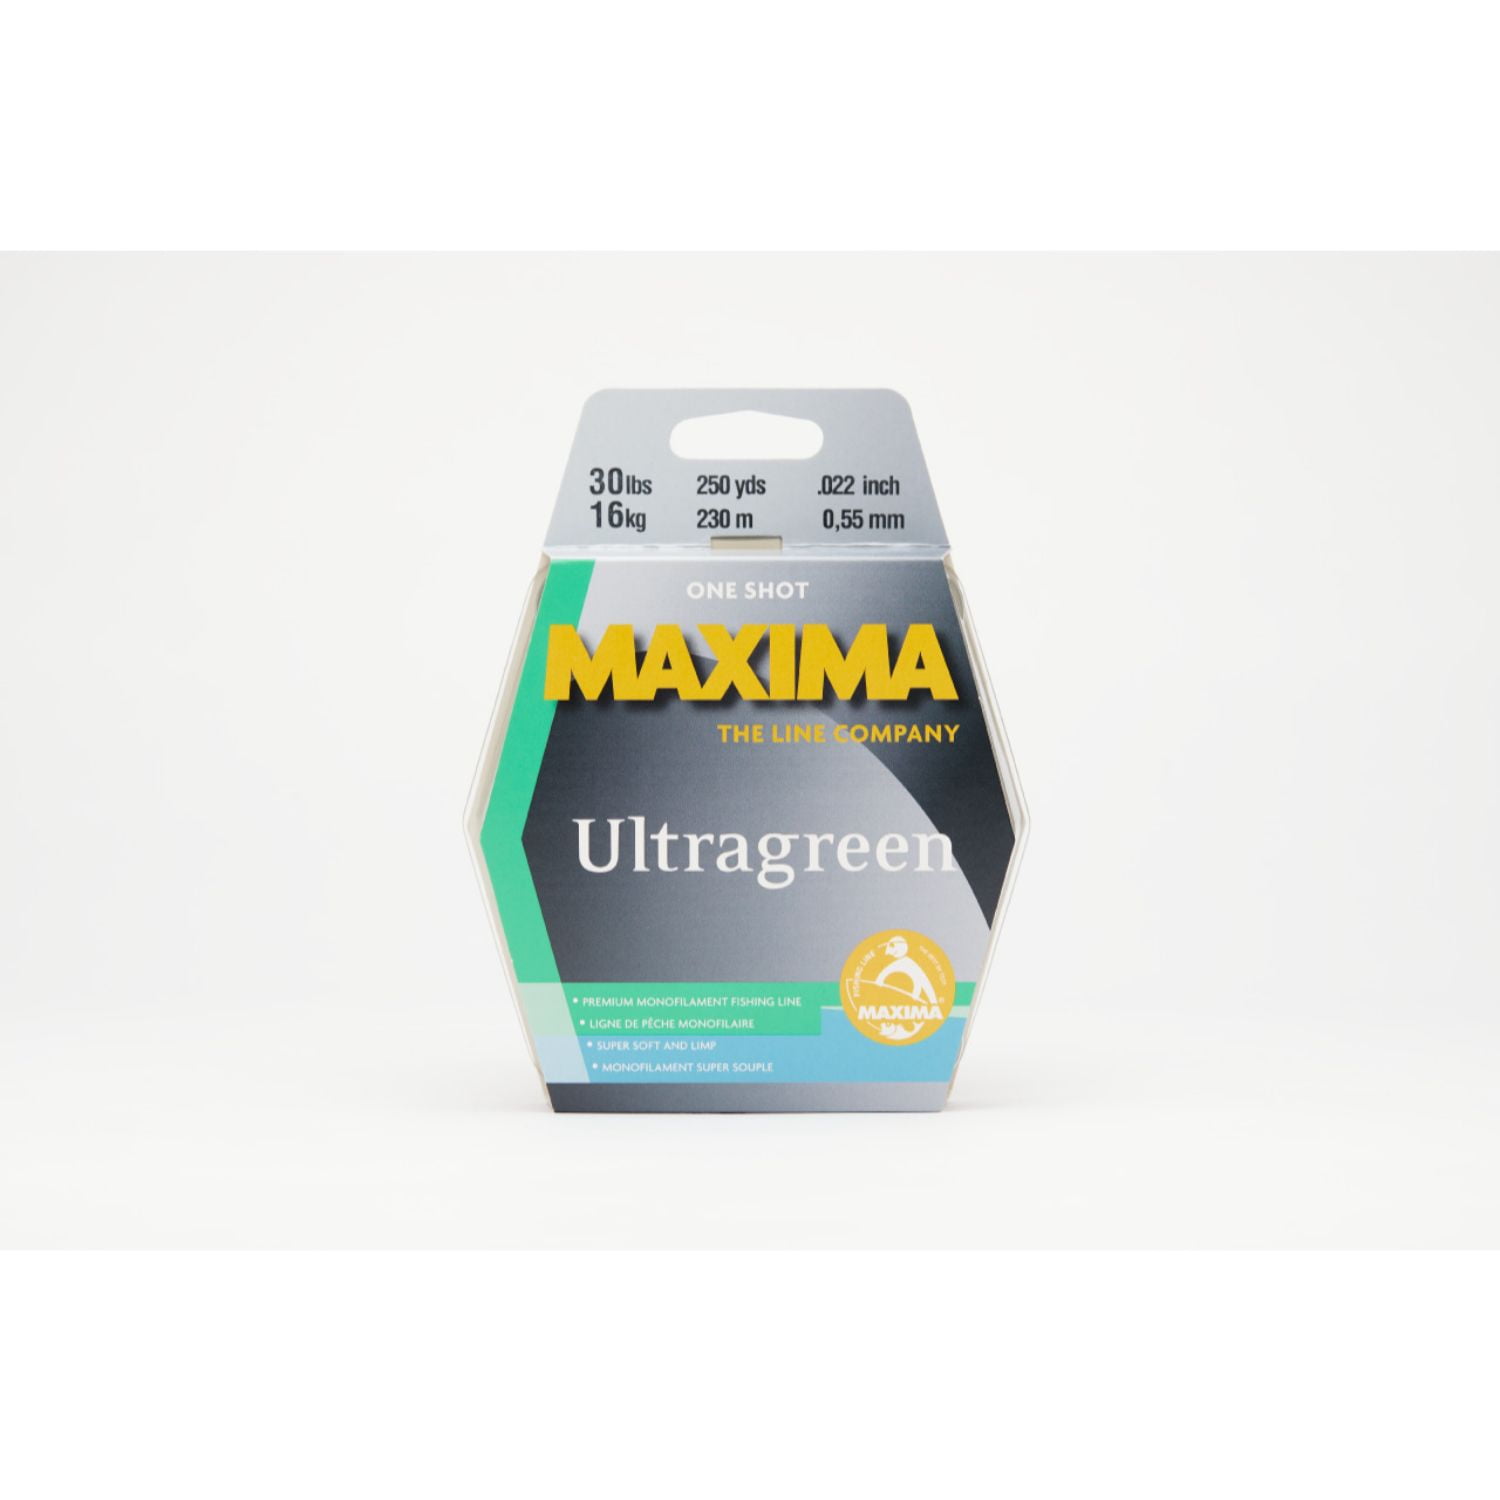 Maxima Ultragreen One Shot Spool - 250yds 30lb